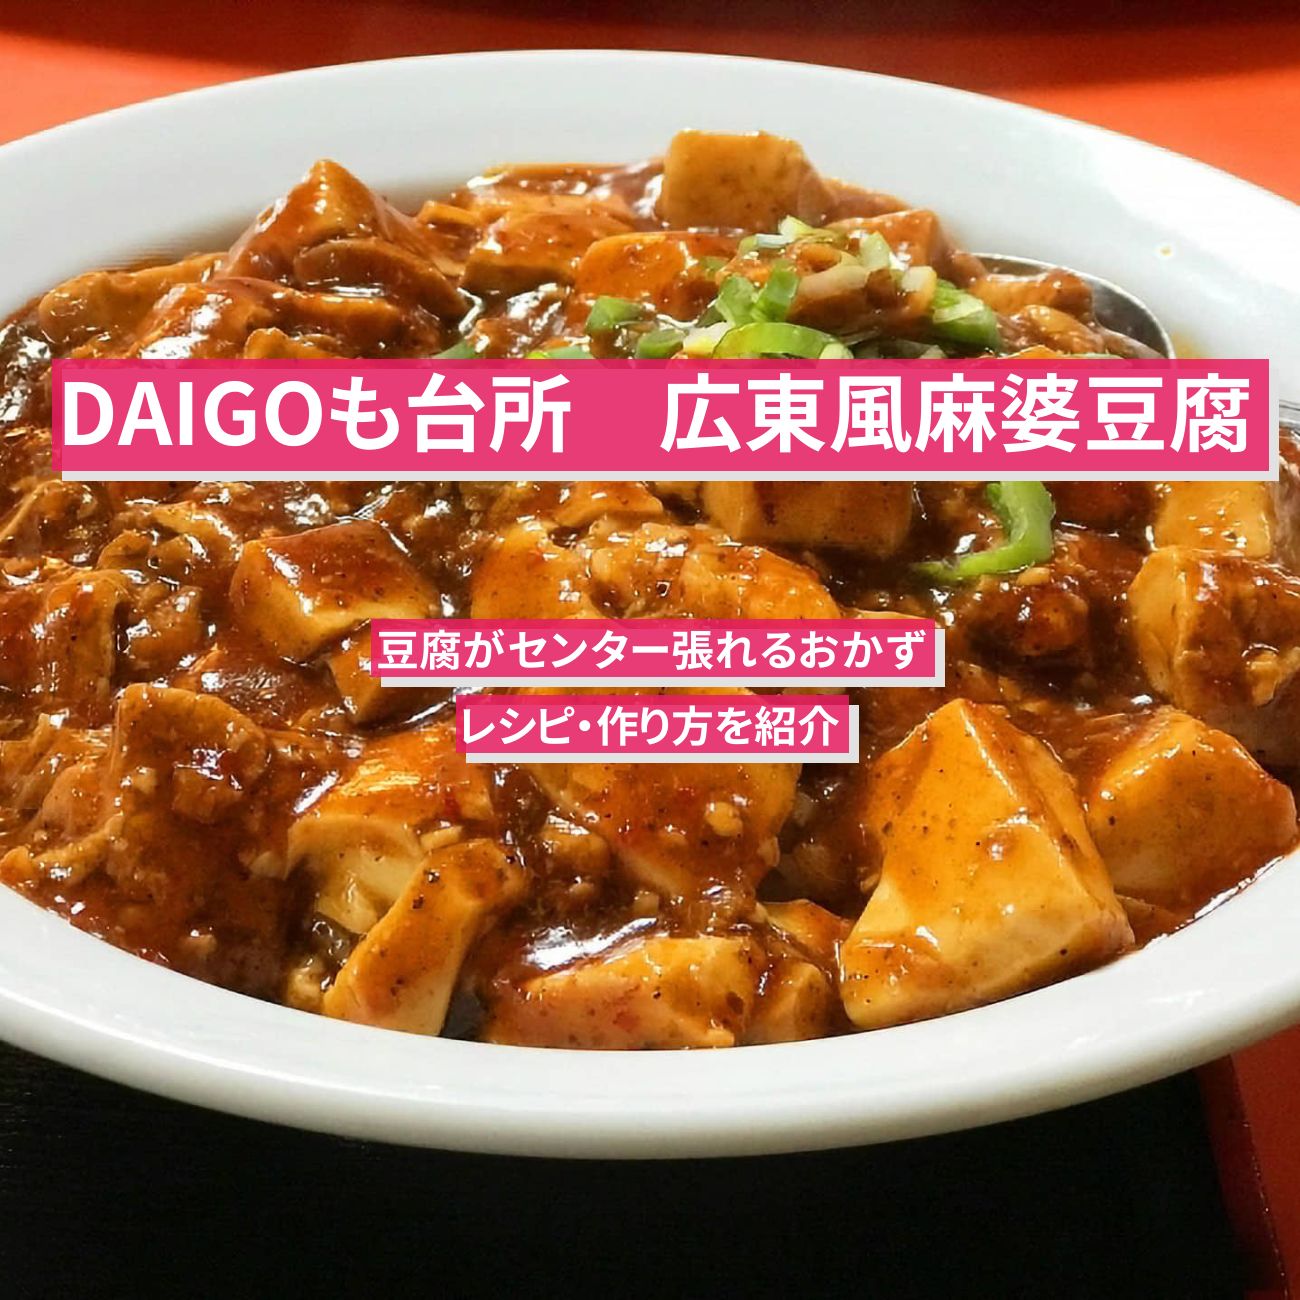 【DAIGOも台所】『広東風麻婆豆腐』のレシピ・作り方を紹介